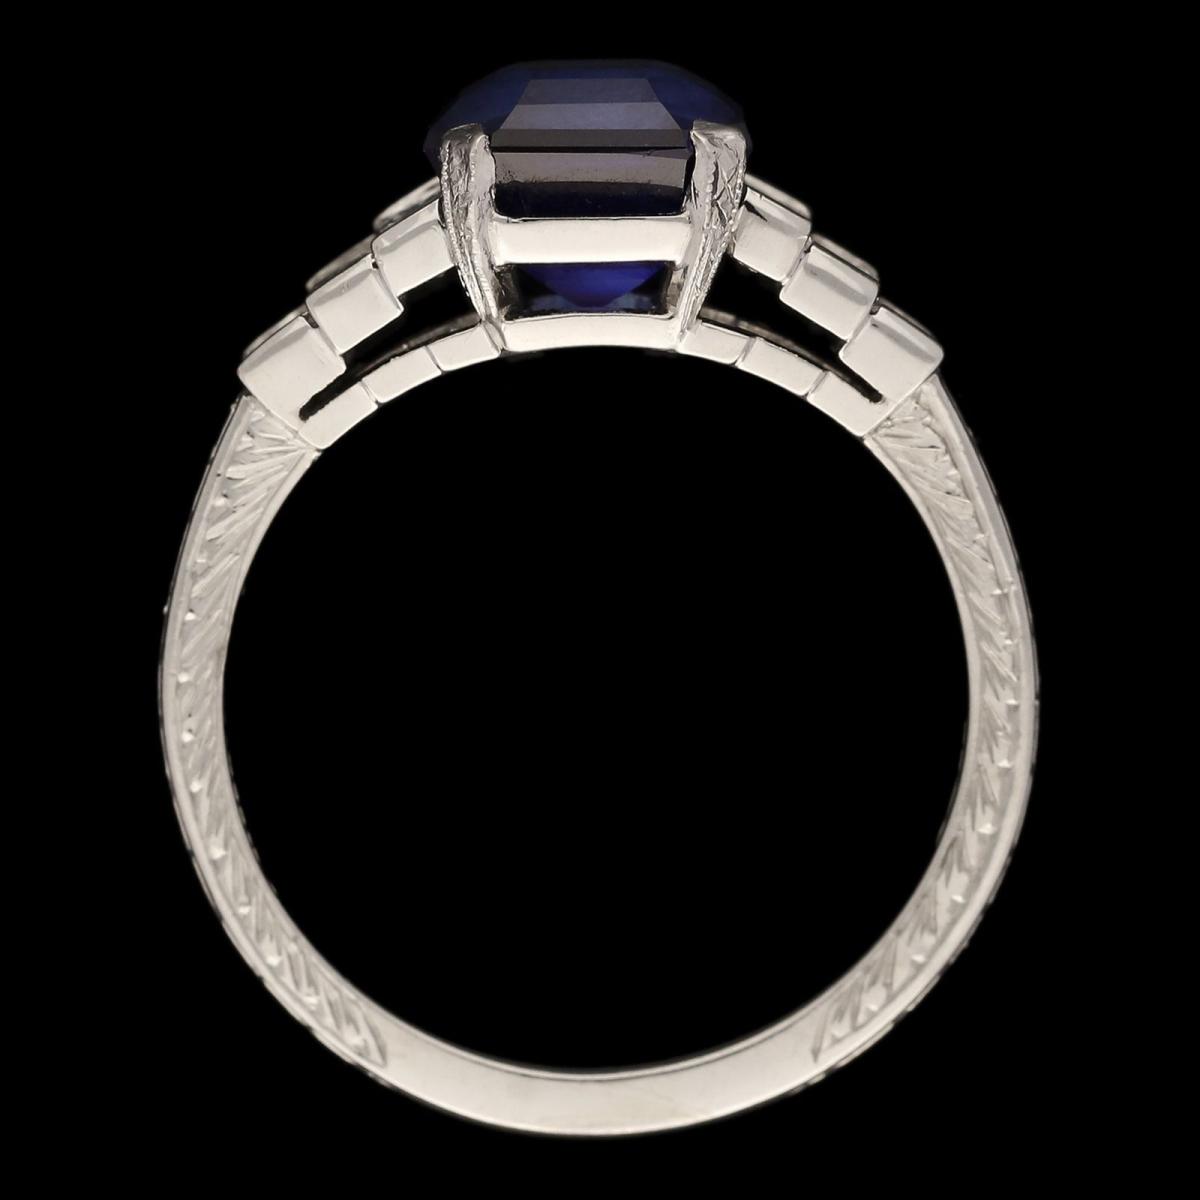 Hancocks Contemporary 3.06ct Ceylon Sapphire And Baguette Diamond Ring In Platinum